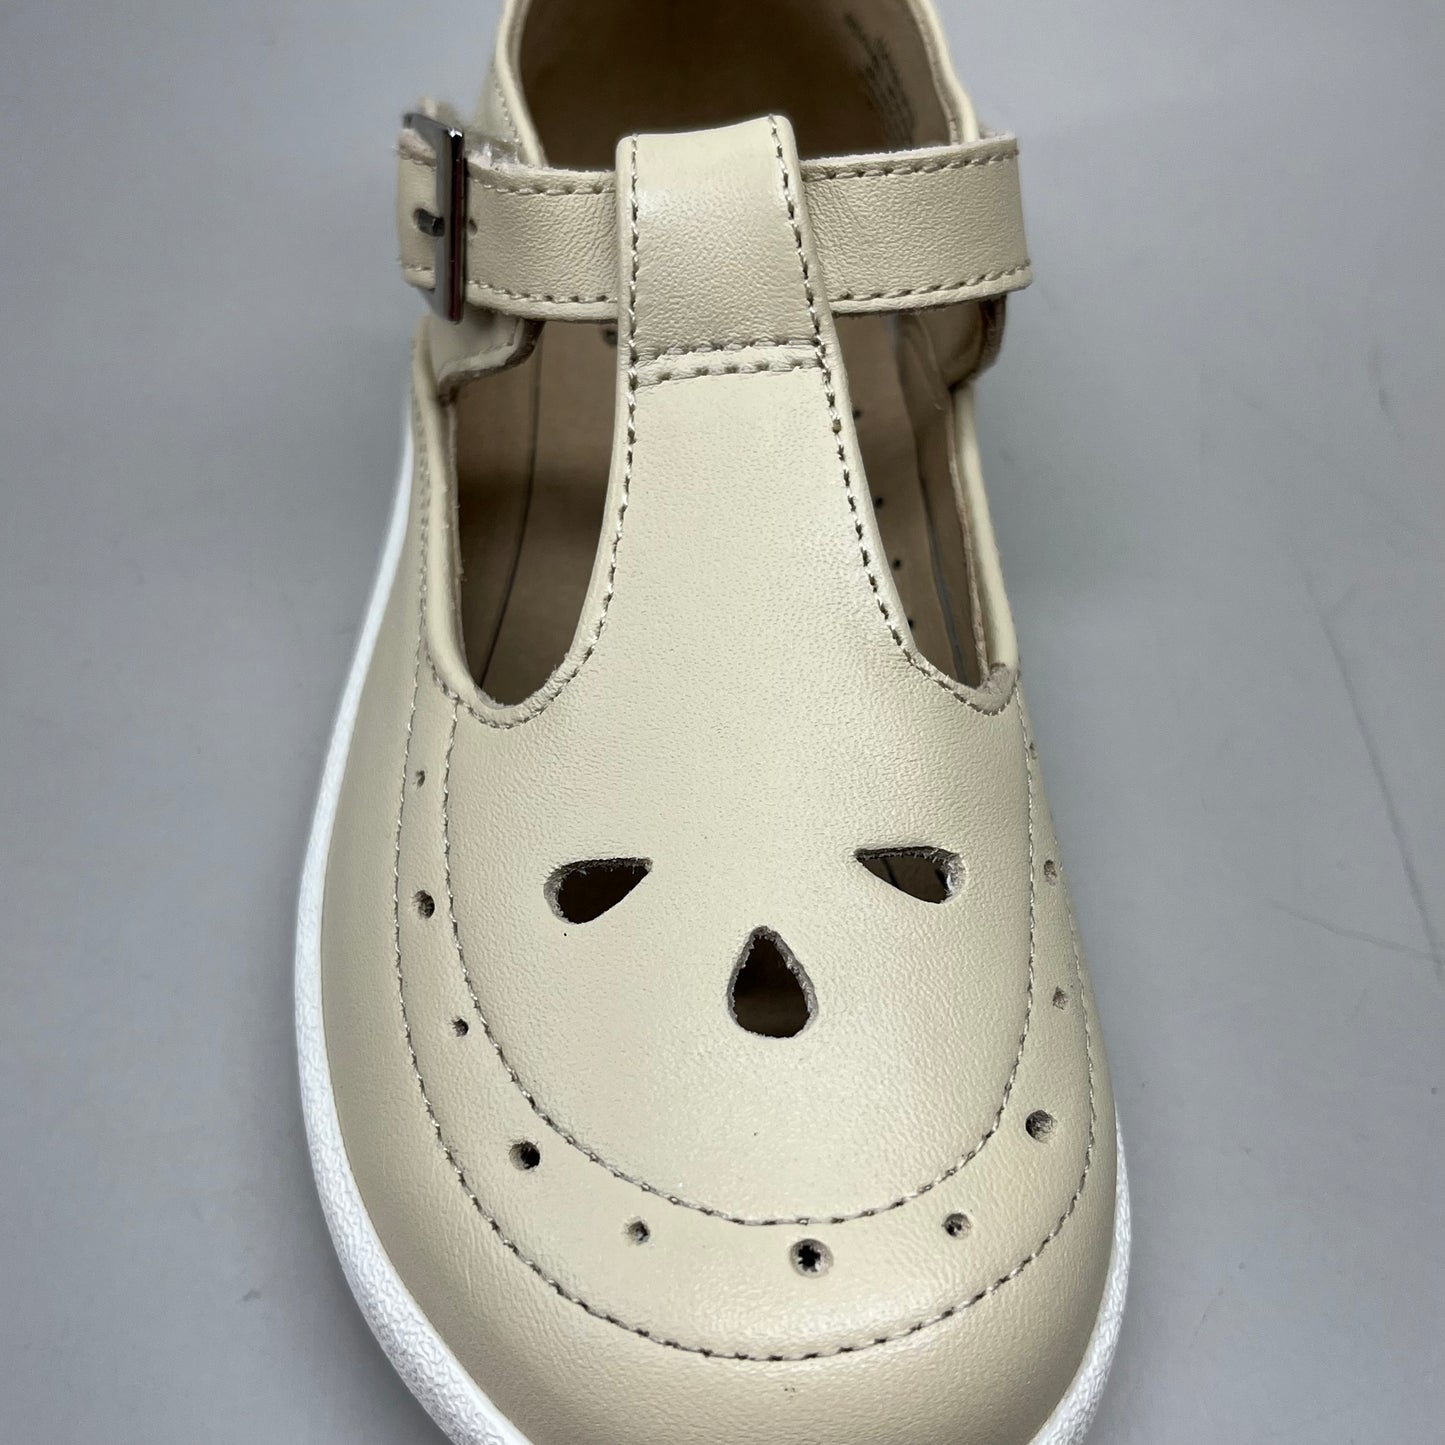 OLD SOLES Royal Adjustable T Strap Leather Shoe Kid's Sz 29 US 12 Cream #5011